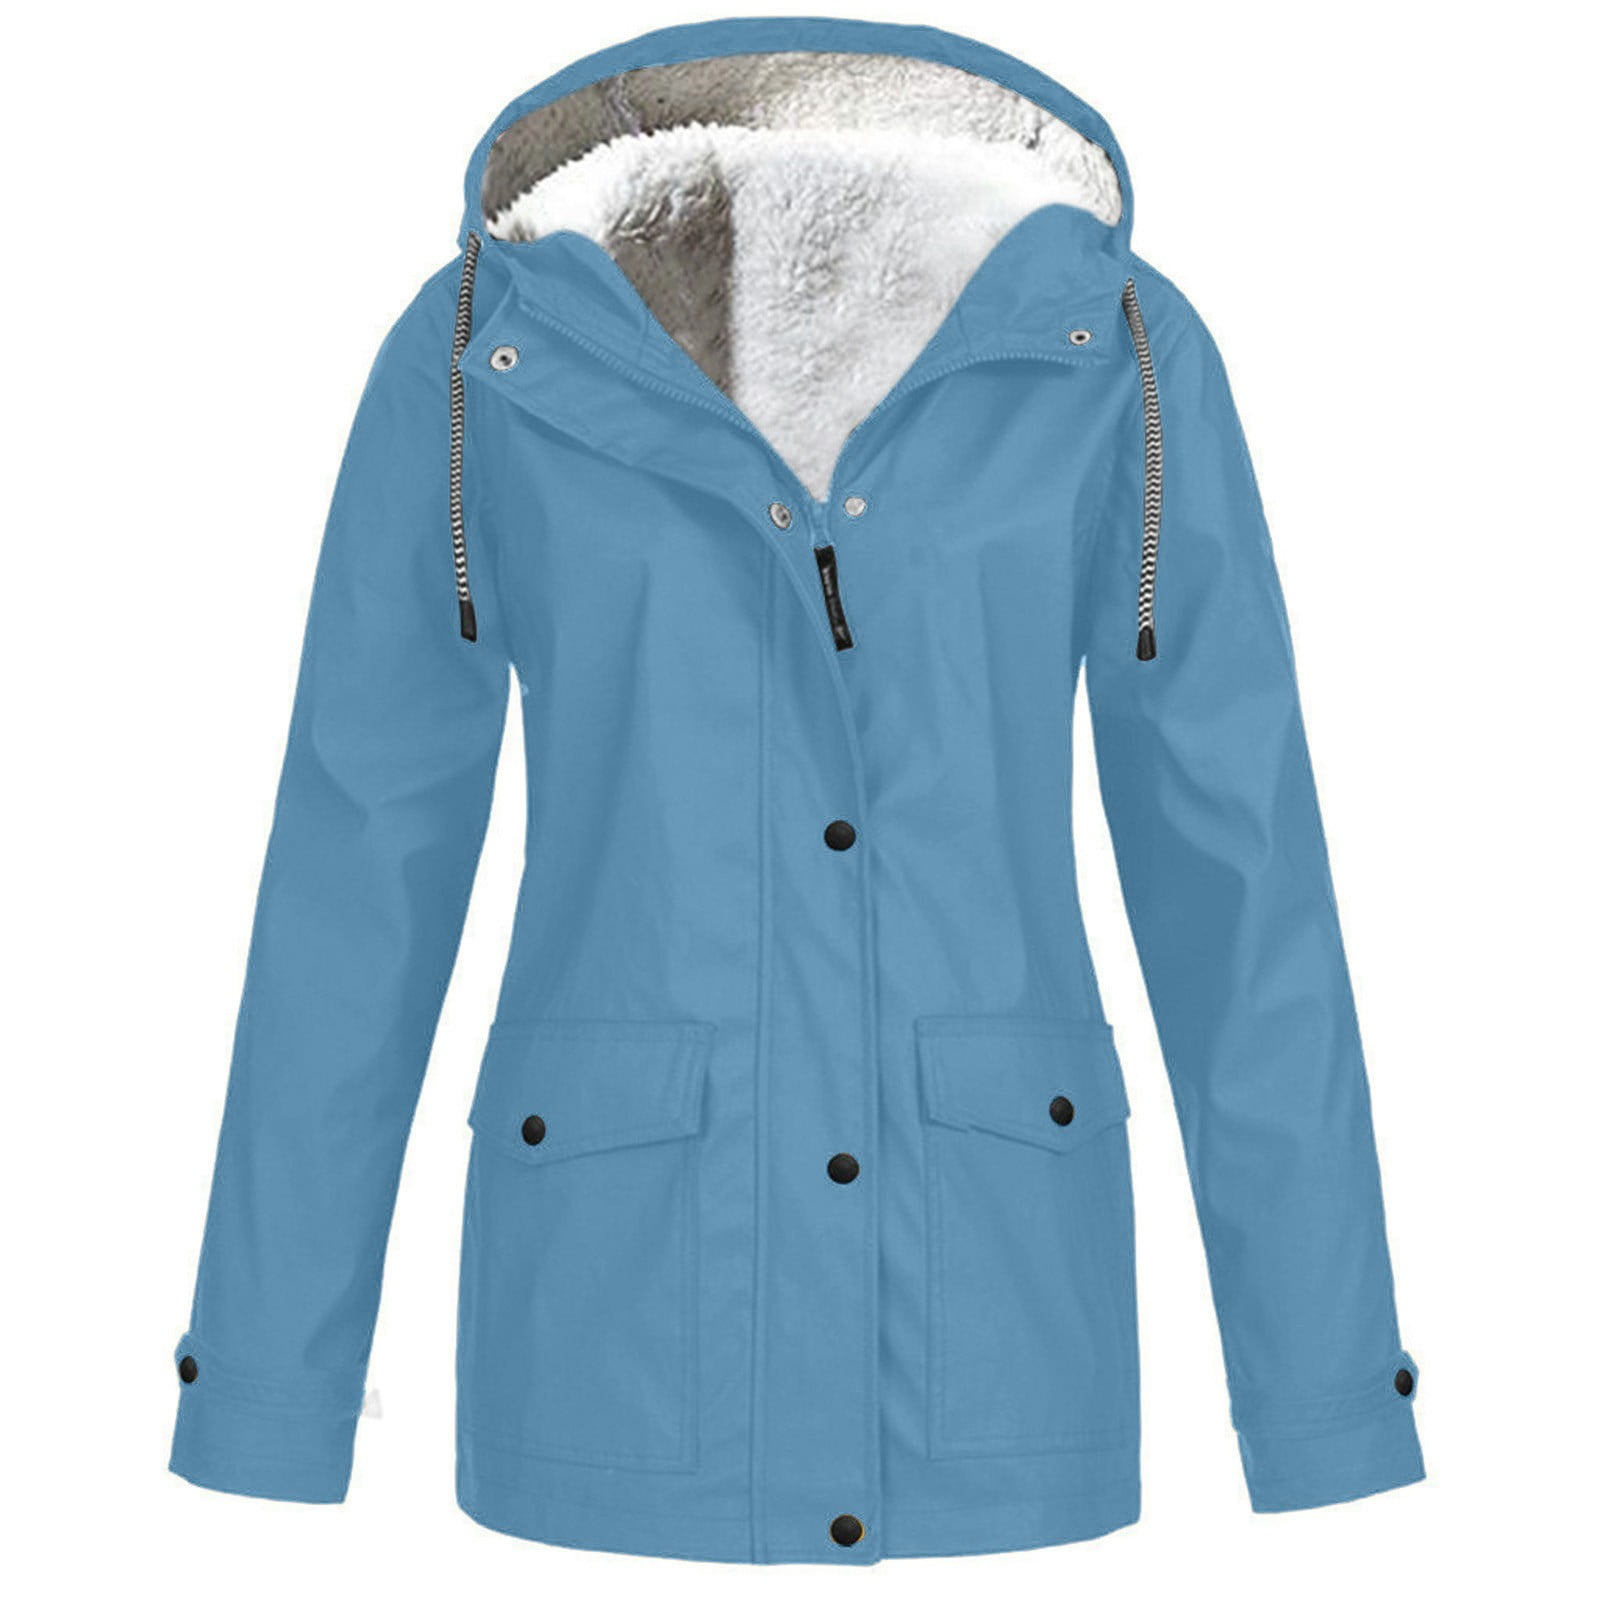 Stamzod Women's Hooded Winter Warm Coat Outdoor Plus Size Mountain